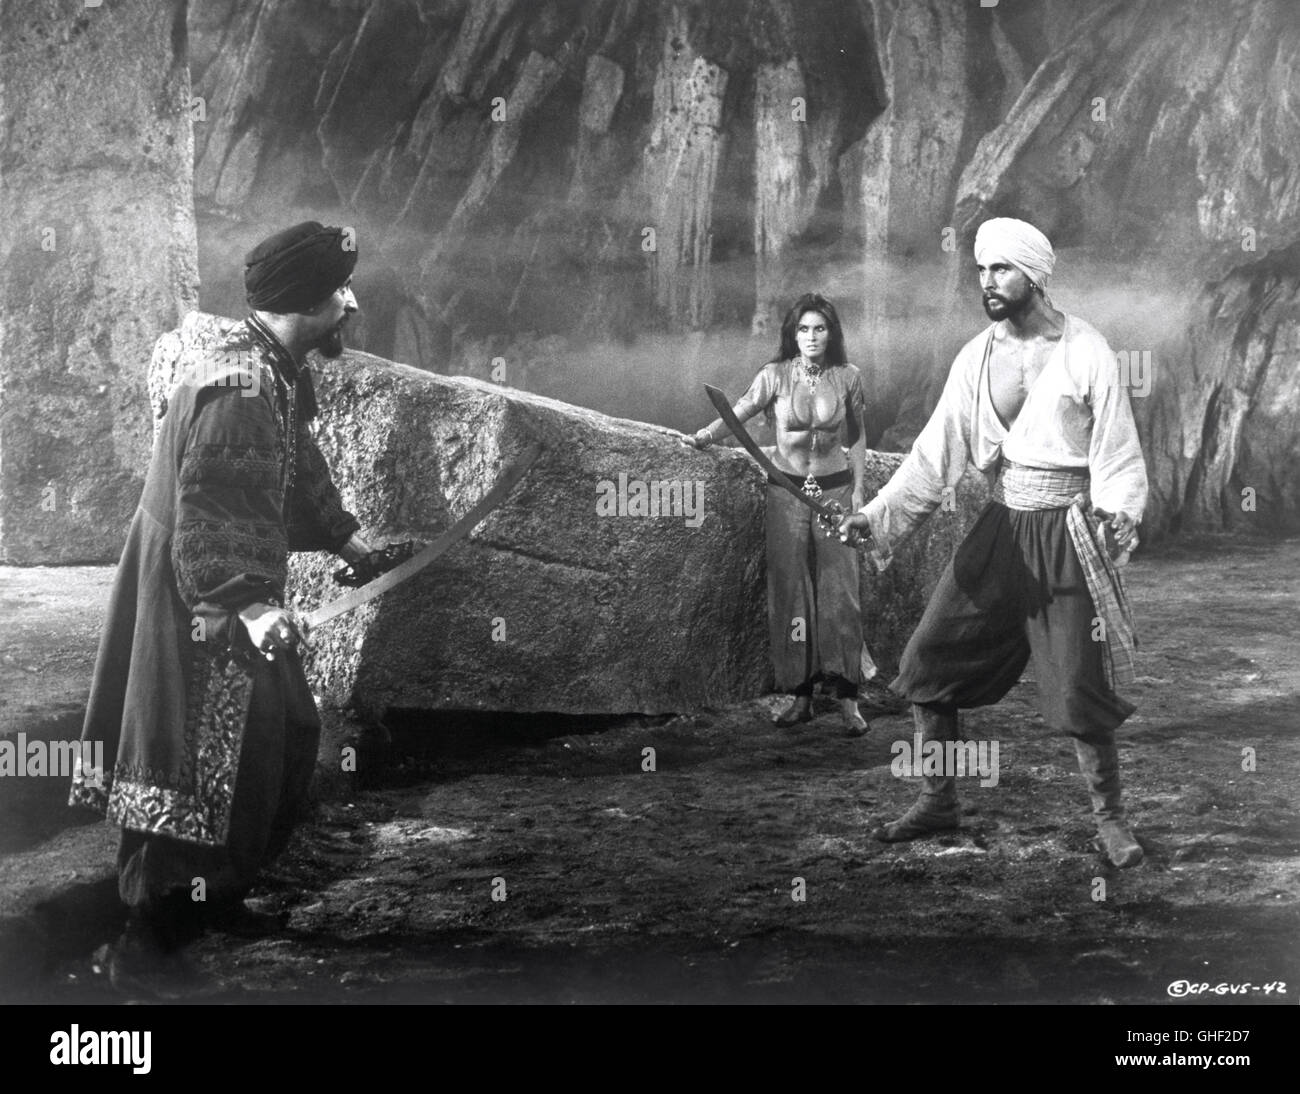 THE GOLDEN VOYAGE OF SINBAD UK/USA 1974 Gordon Hessler TOM BAKER as Koura, CAROLINE MUNRO as Margiana, JOHN PHILLIP LAW as Sinbad Regie: Gordon Hessler Stock Photo